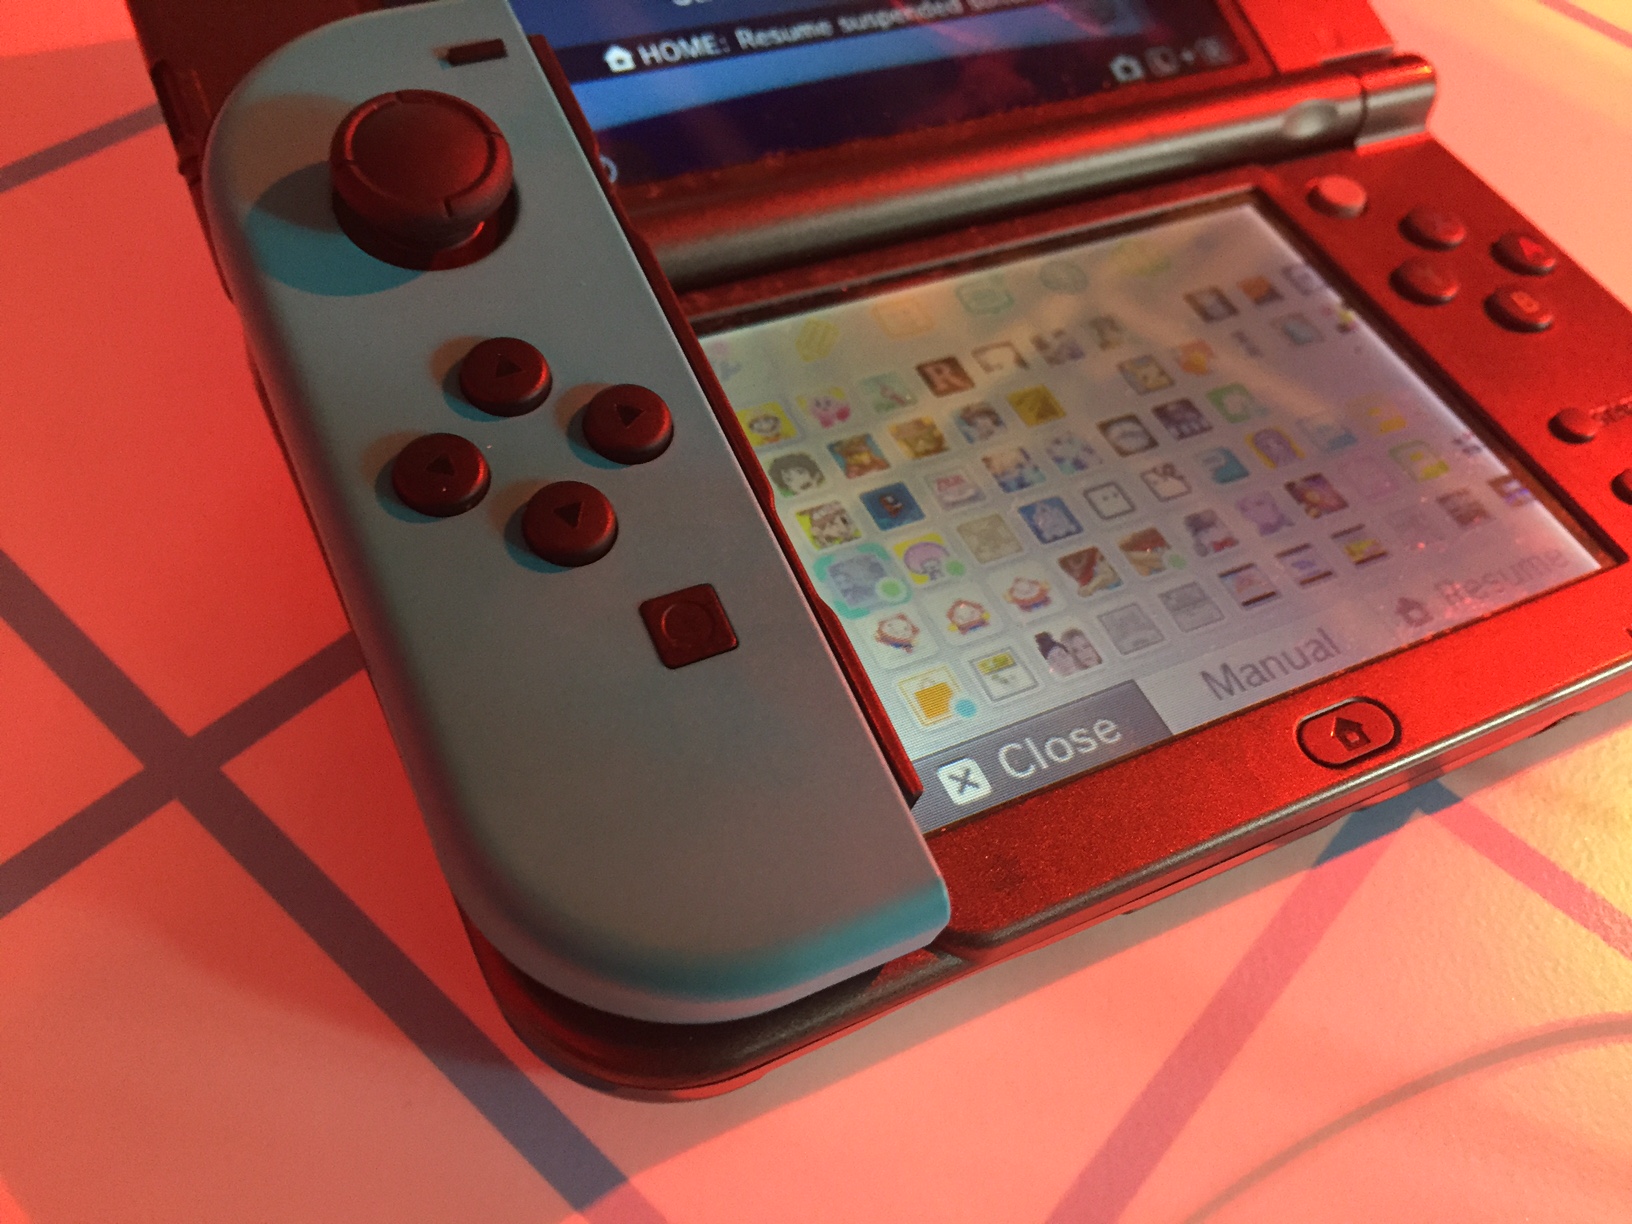 Nintendo Switch: The Size Comparison